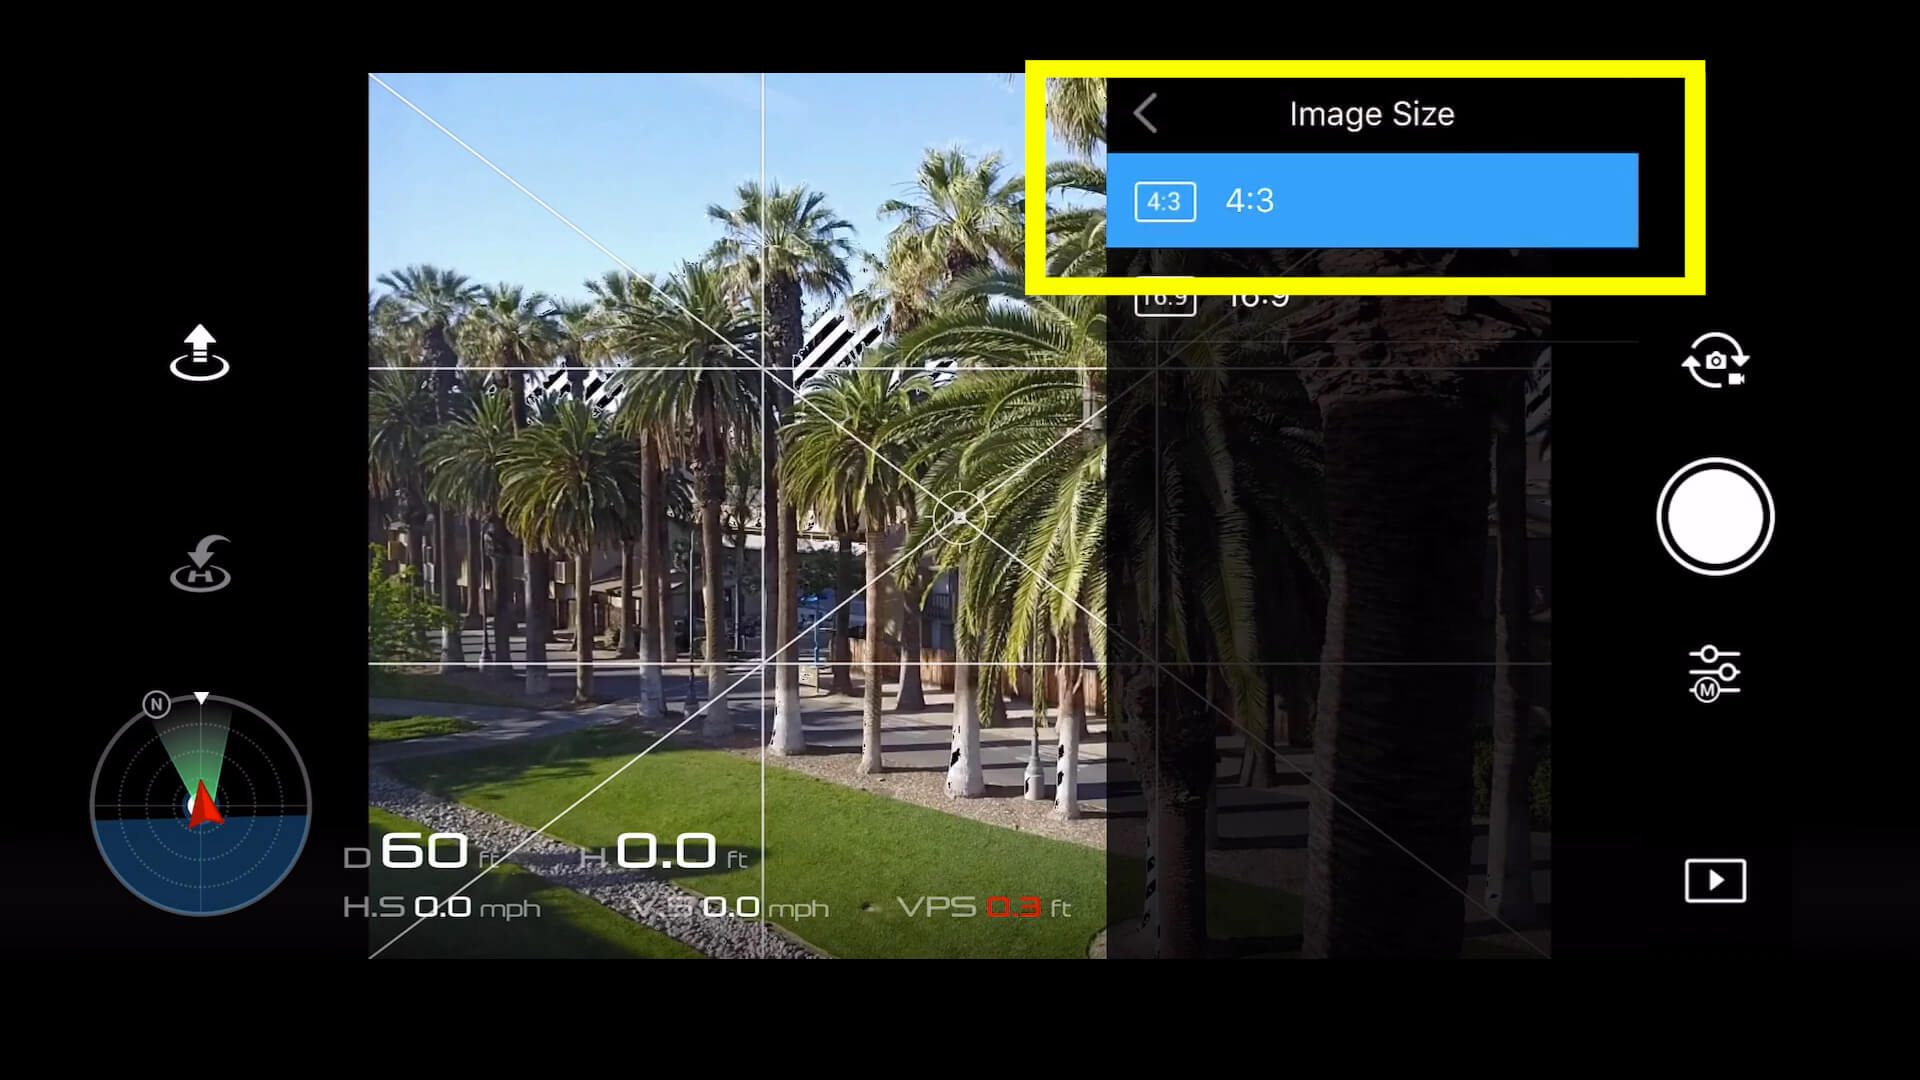 21 basic camera settings for dji drone photos - image size